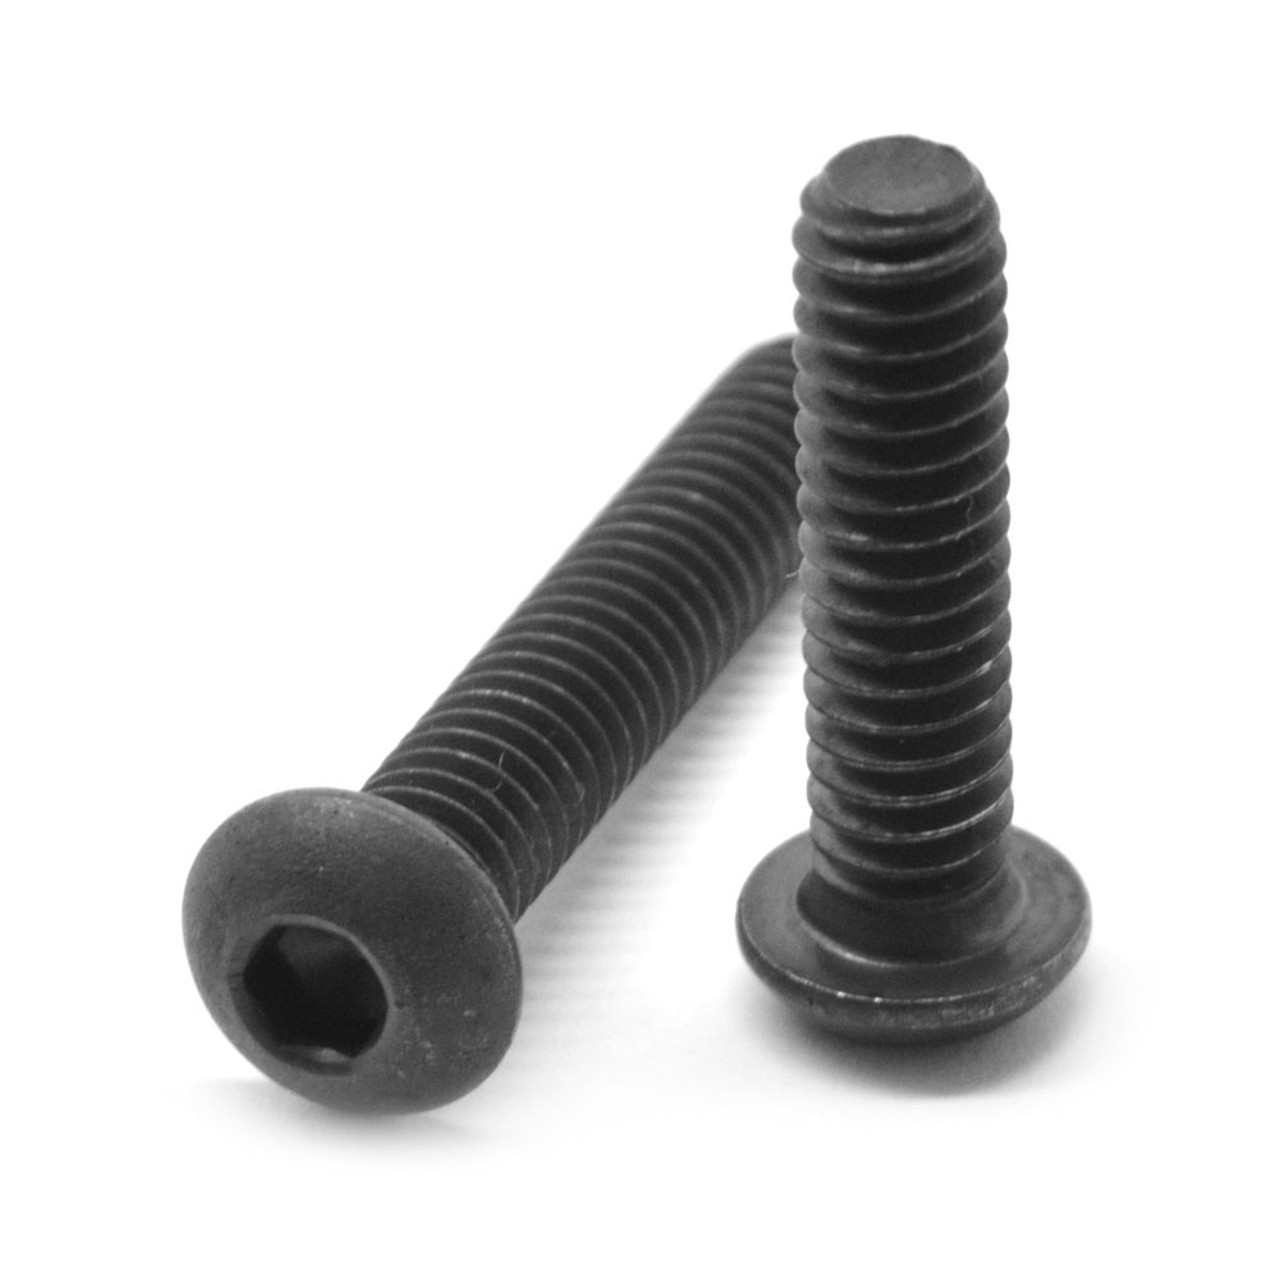 M12 x 1.75 x 60 MM (FT) Coarse Thread ISO 7380 Class 10.9 Socket Button Head Cap Screw Alloy Steel Black Oxide